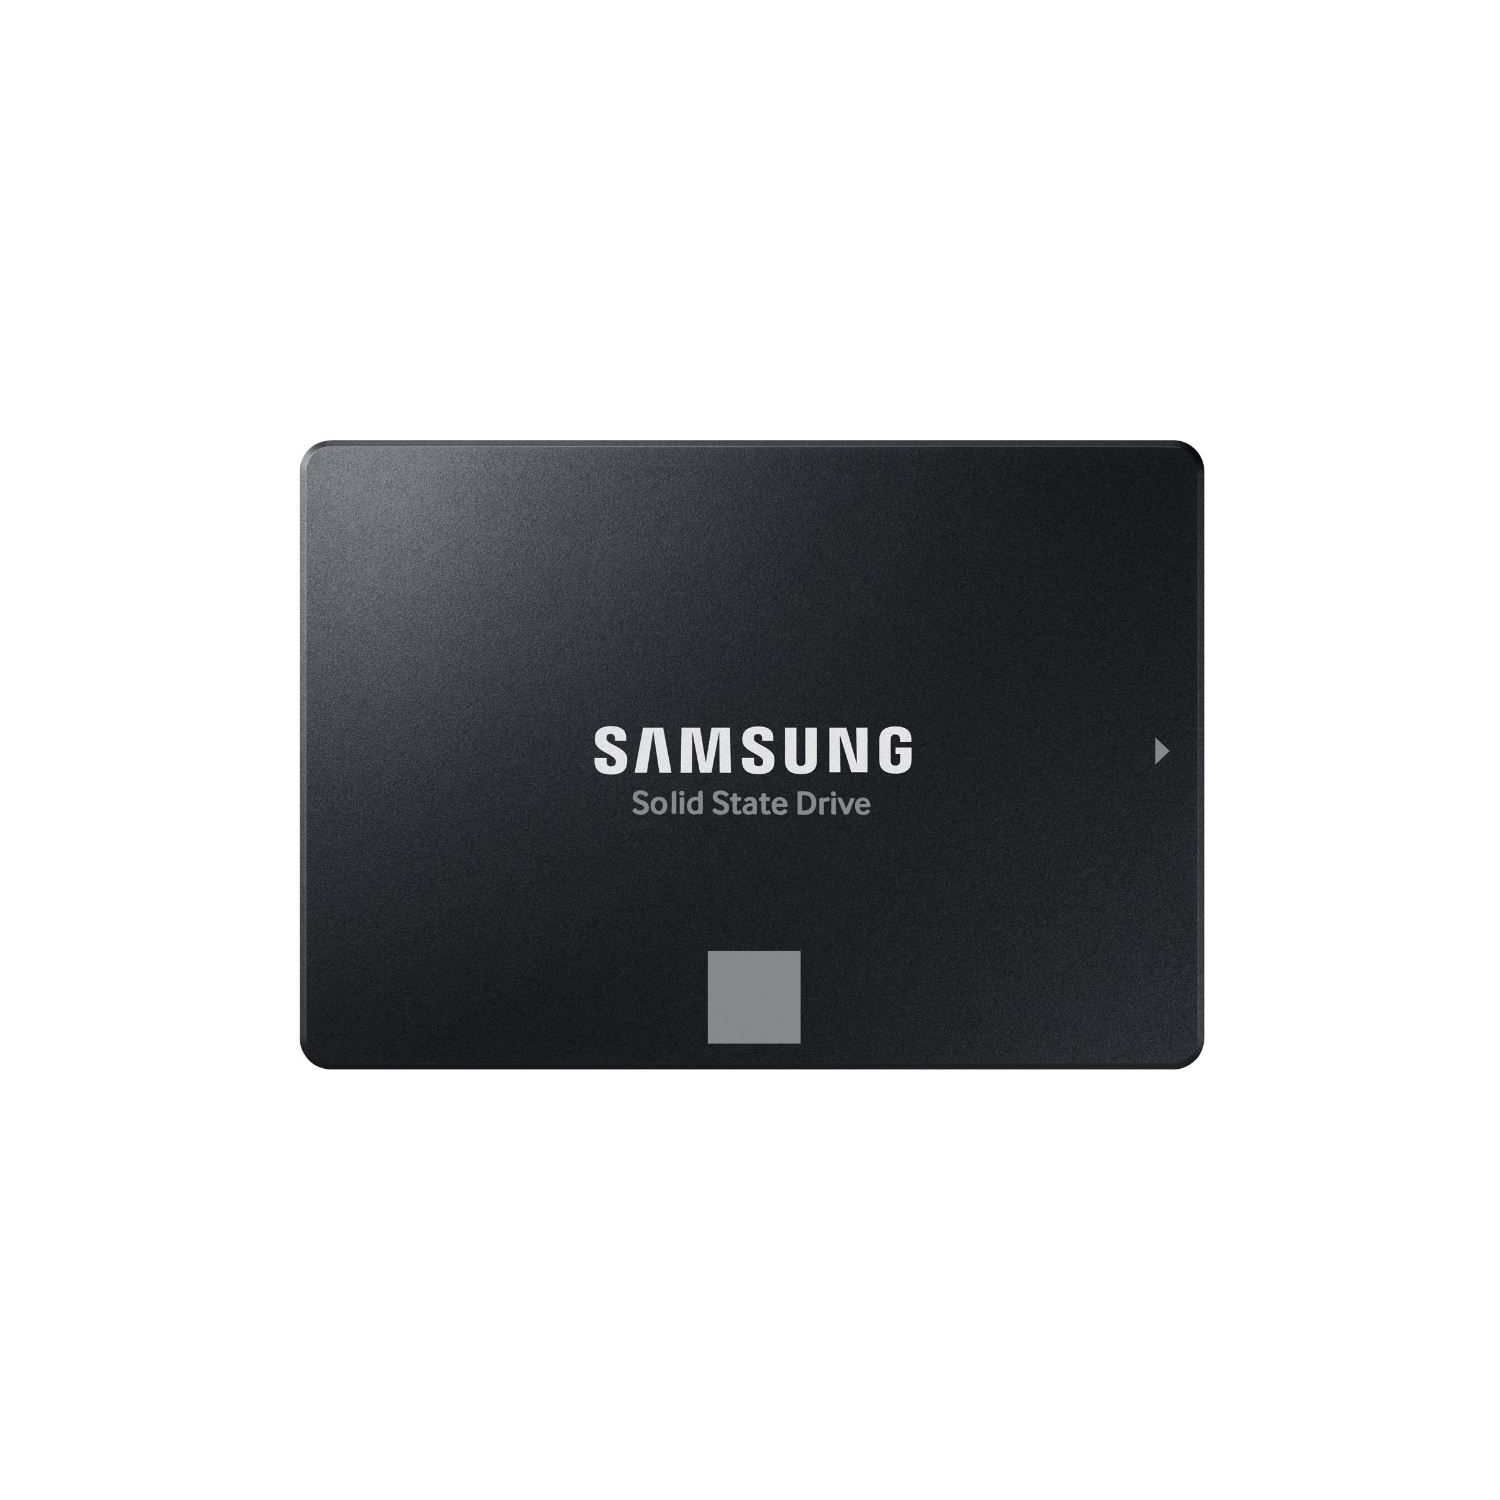 Refurbished (Good) Samsung 860 EVO - 250GB - 2.5-Inch SATA III Internal SSD